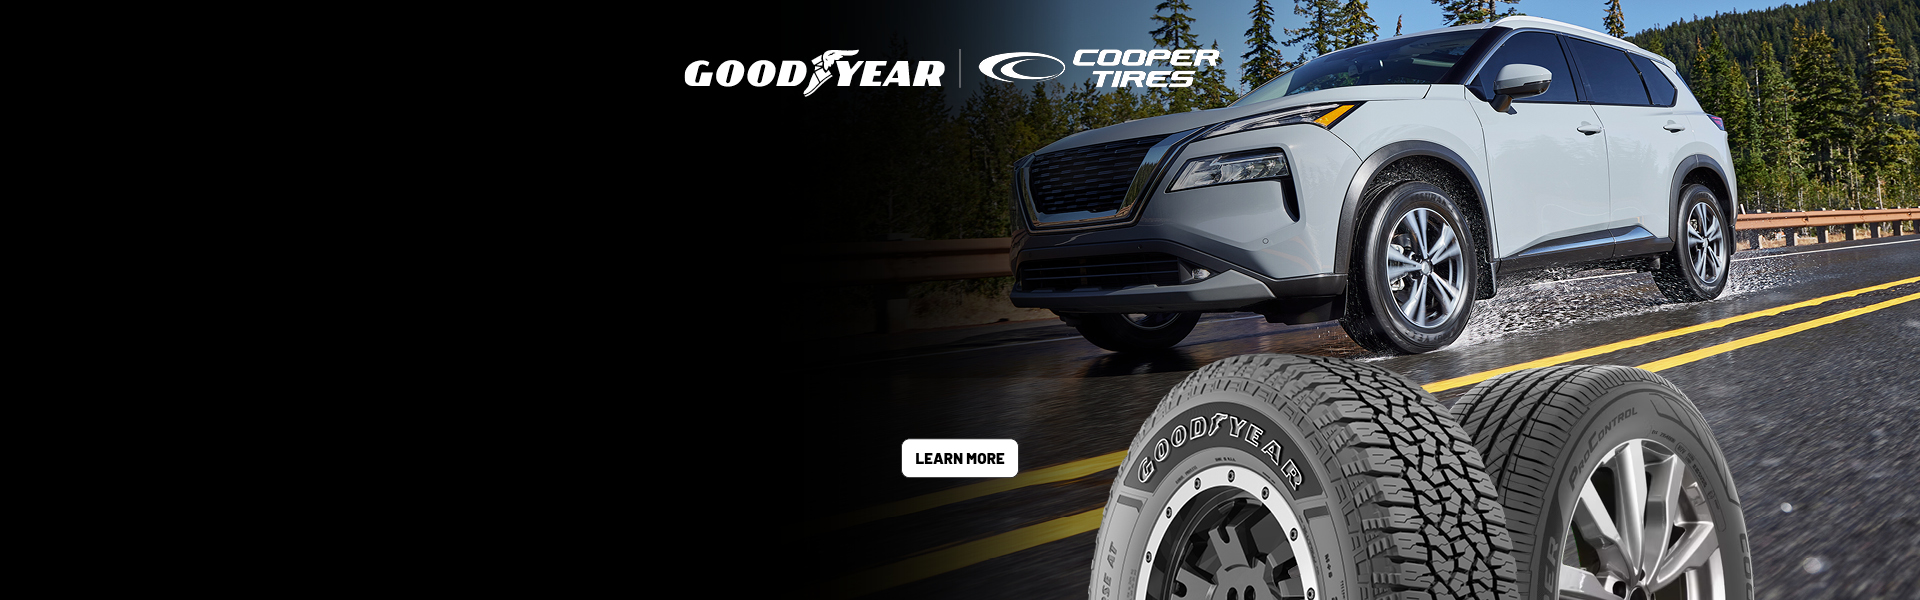 Goodyear-Cooper-Banner